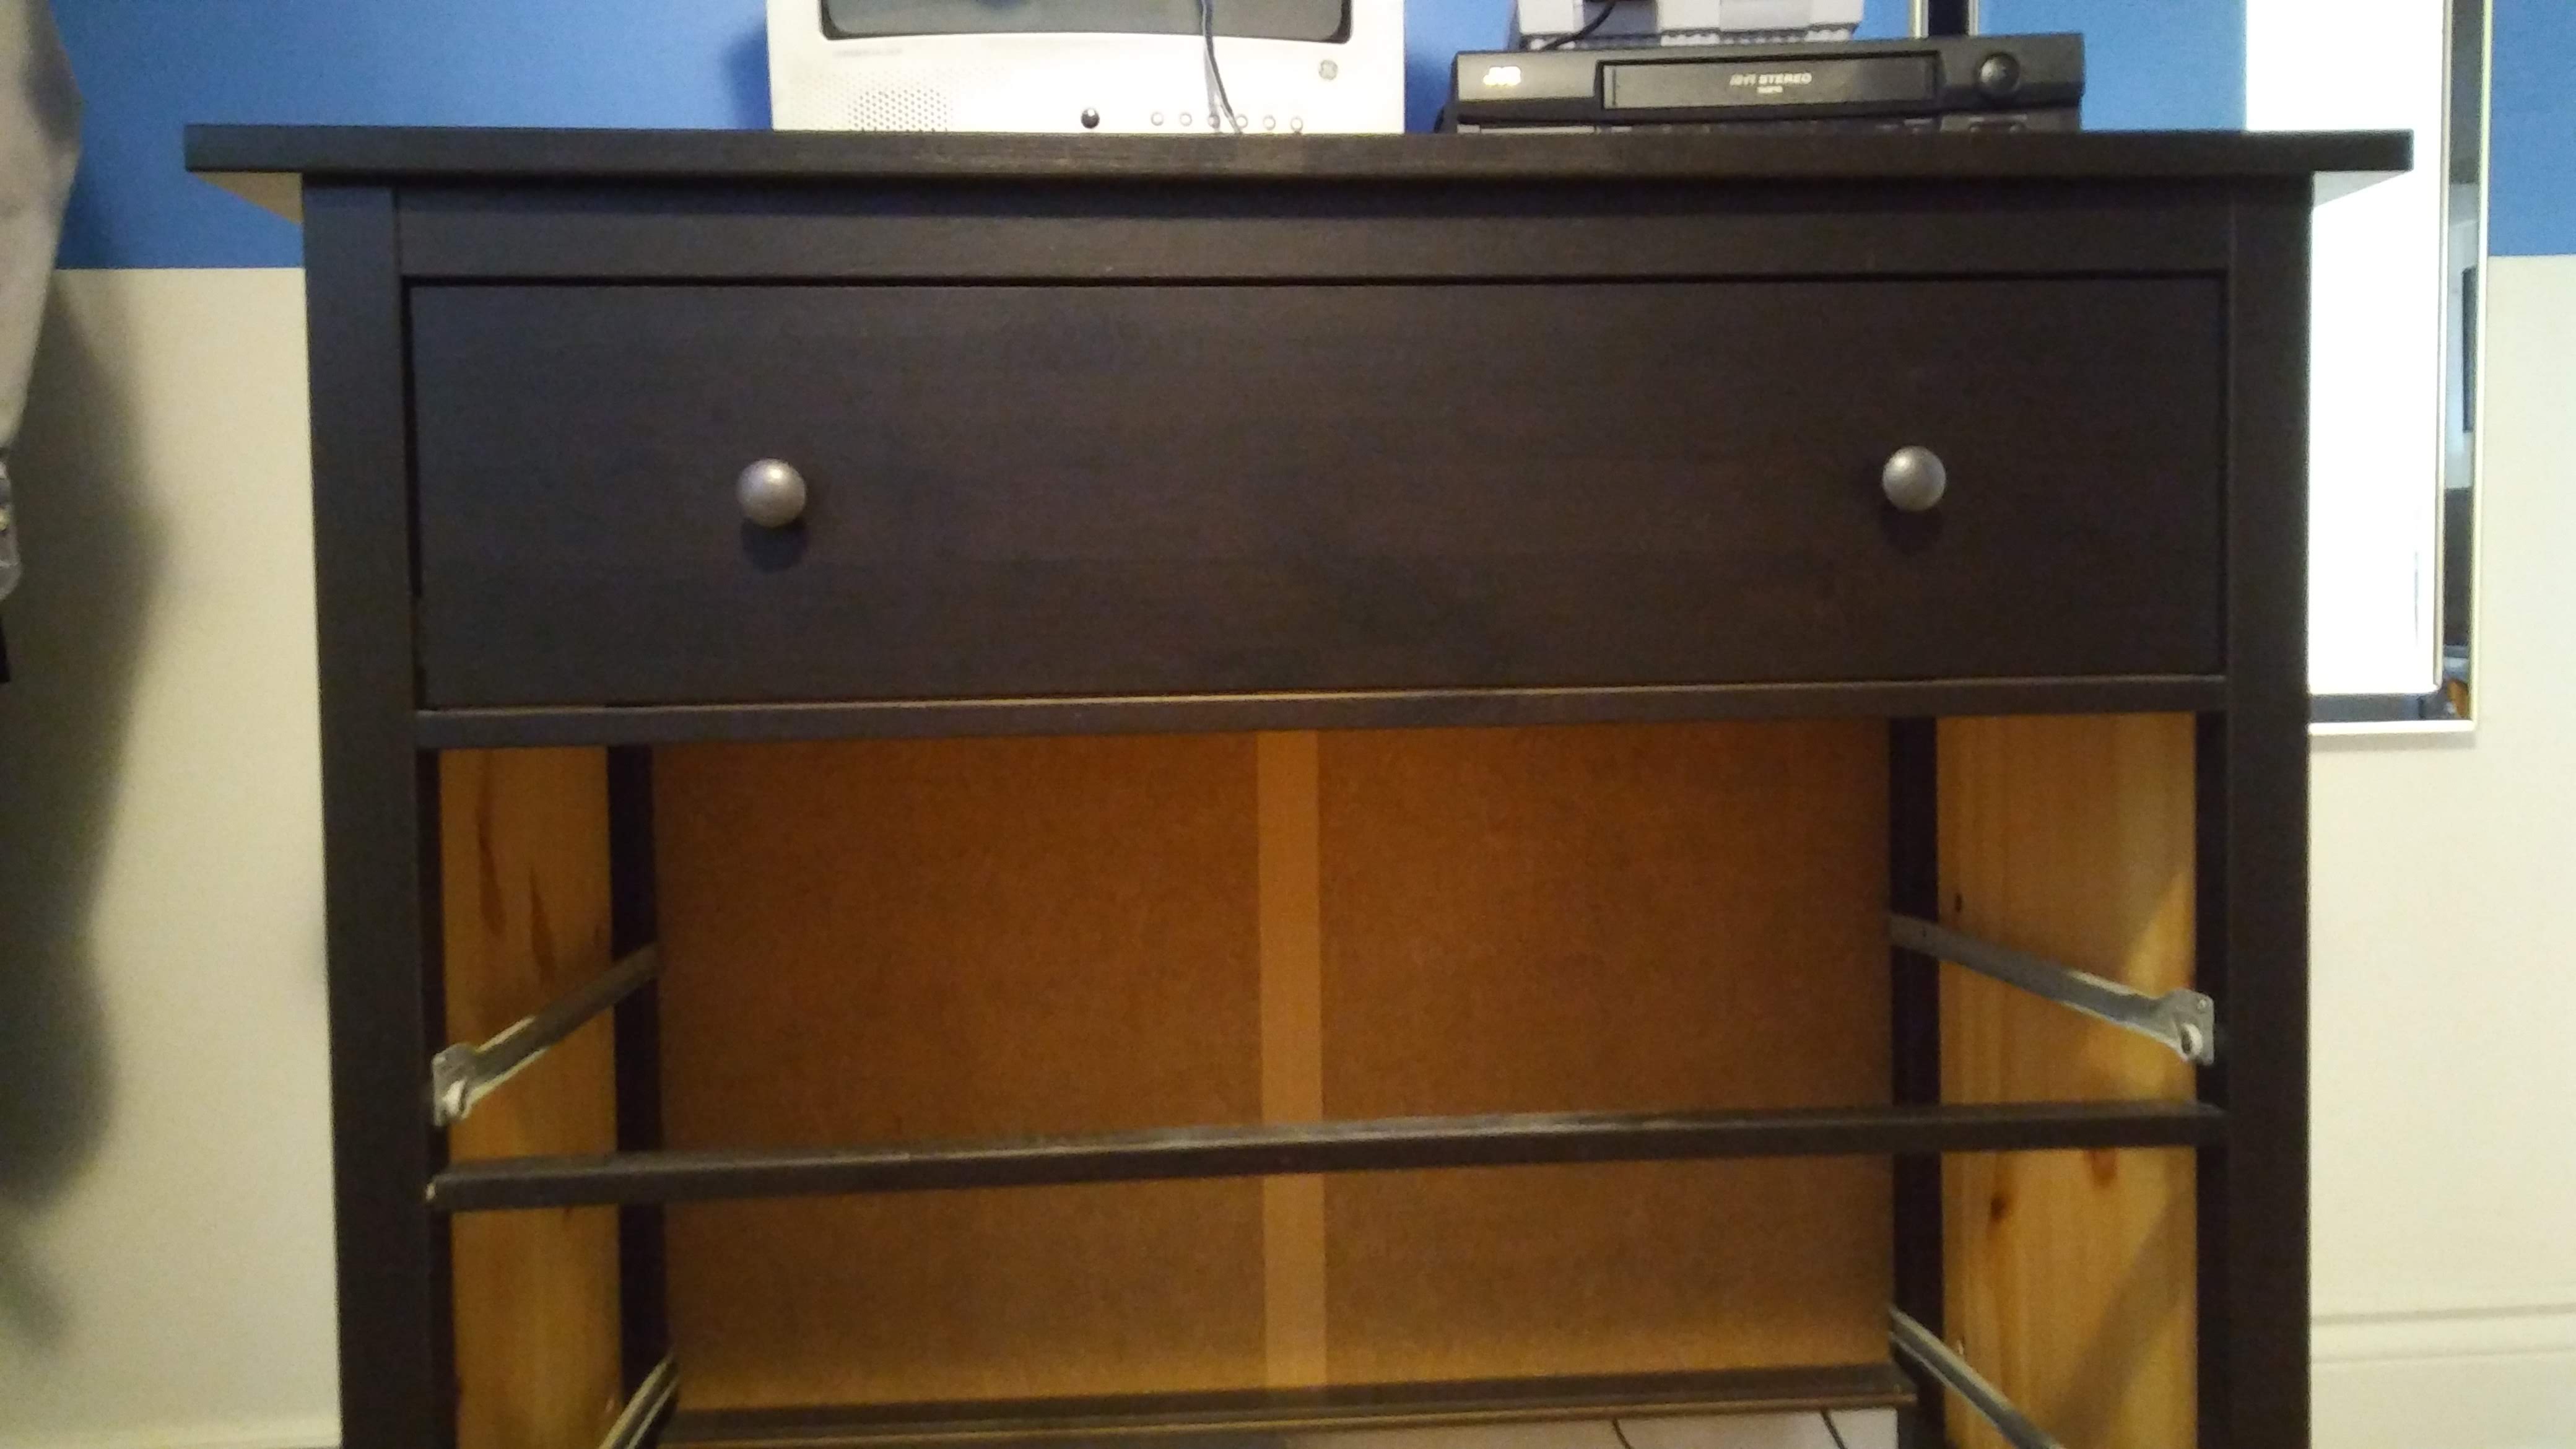 Repairing My Ikea Dresser, Replacement Drawer For Ikea Hemnes Dresser